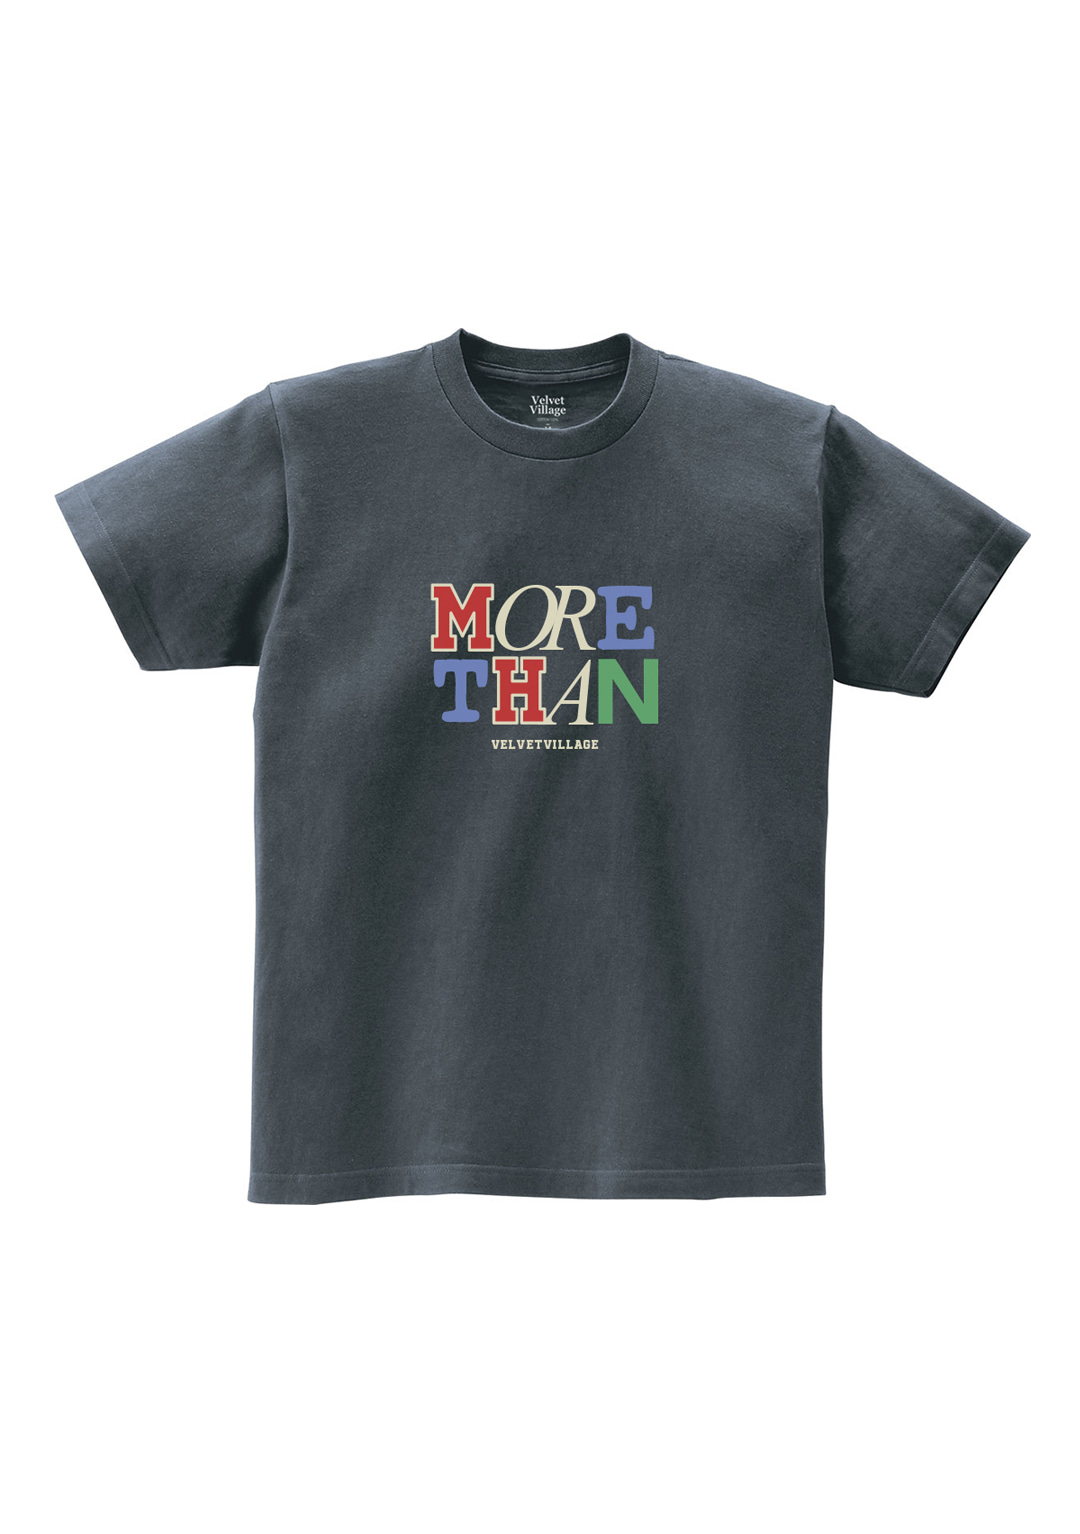 Morethan T-shirt (Charcoal)